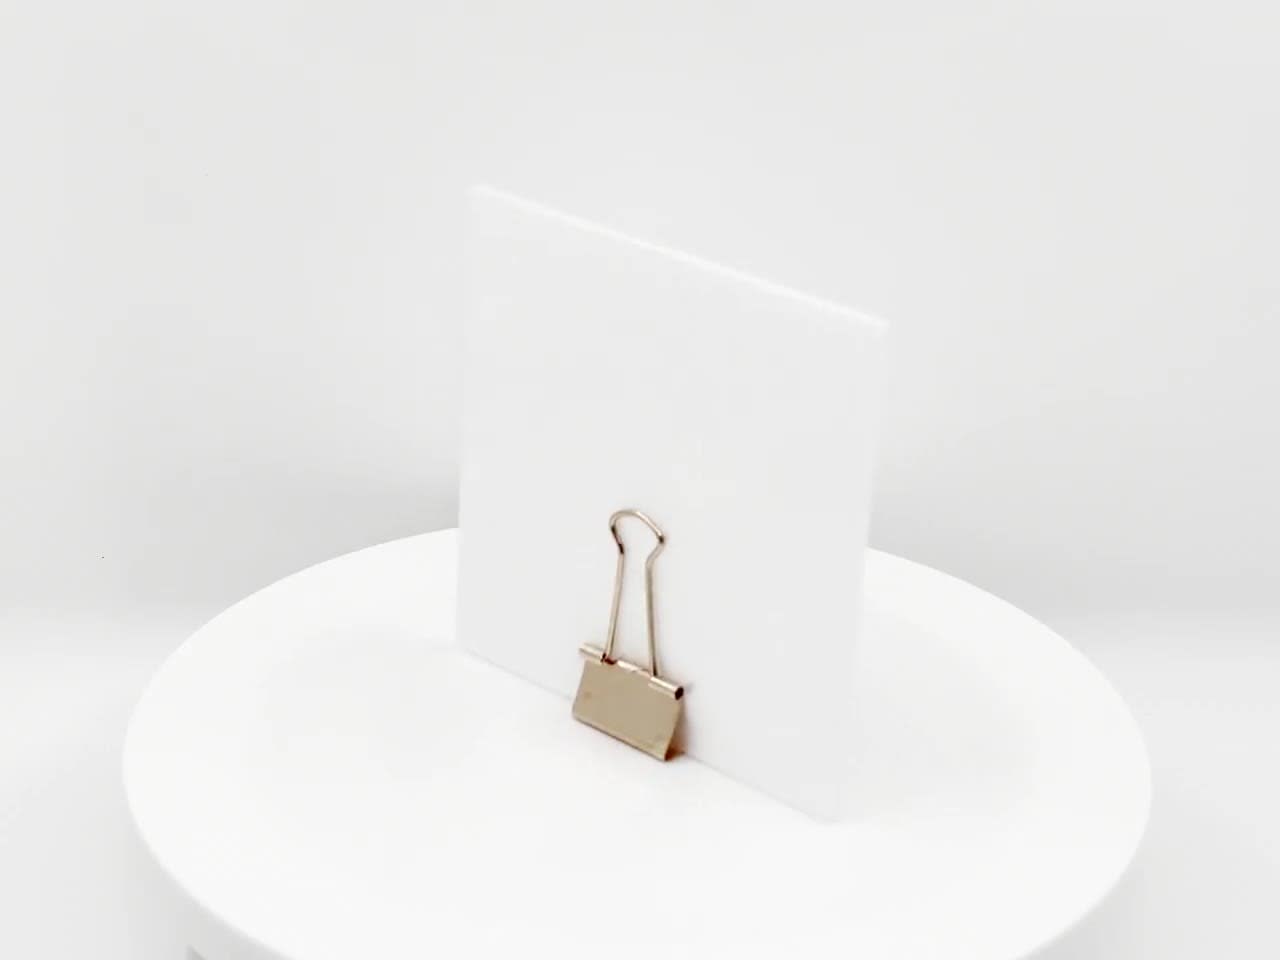 White Ripple Pearl Acrylic Sheet – Agibo